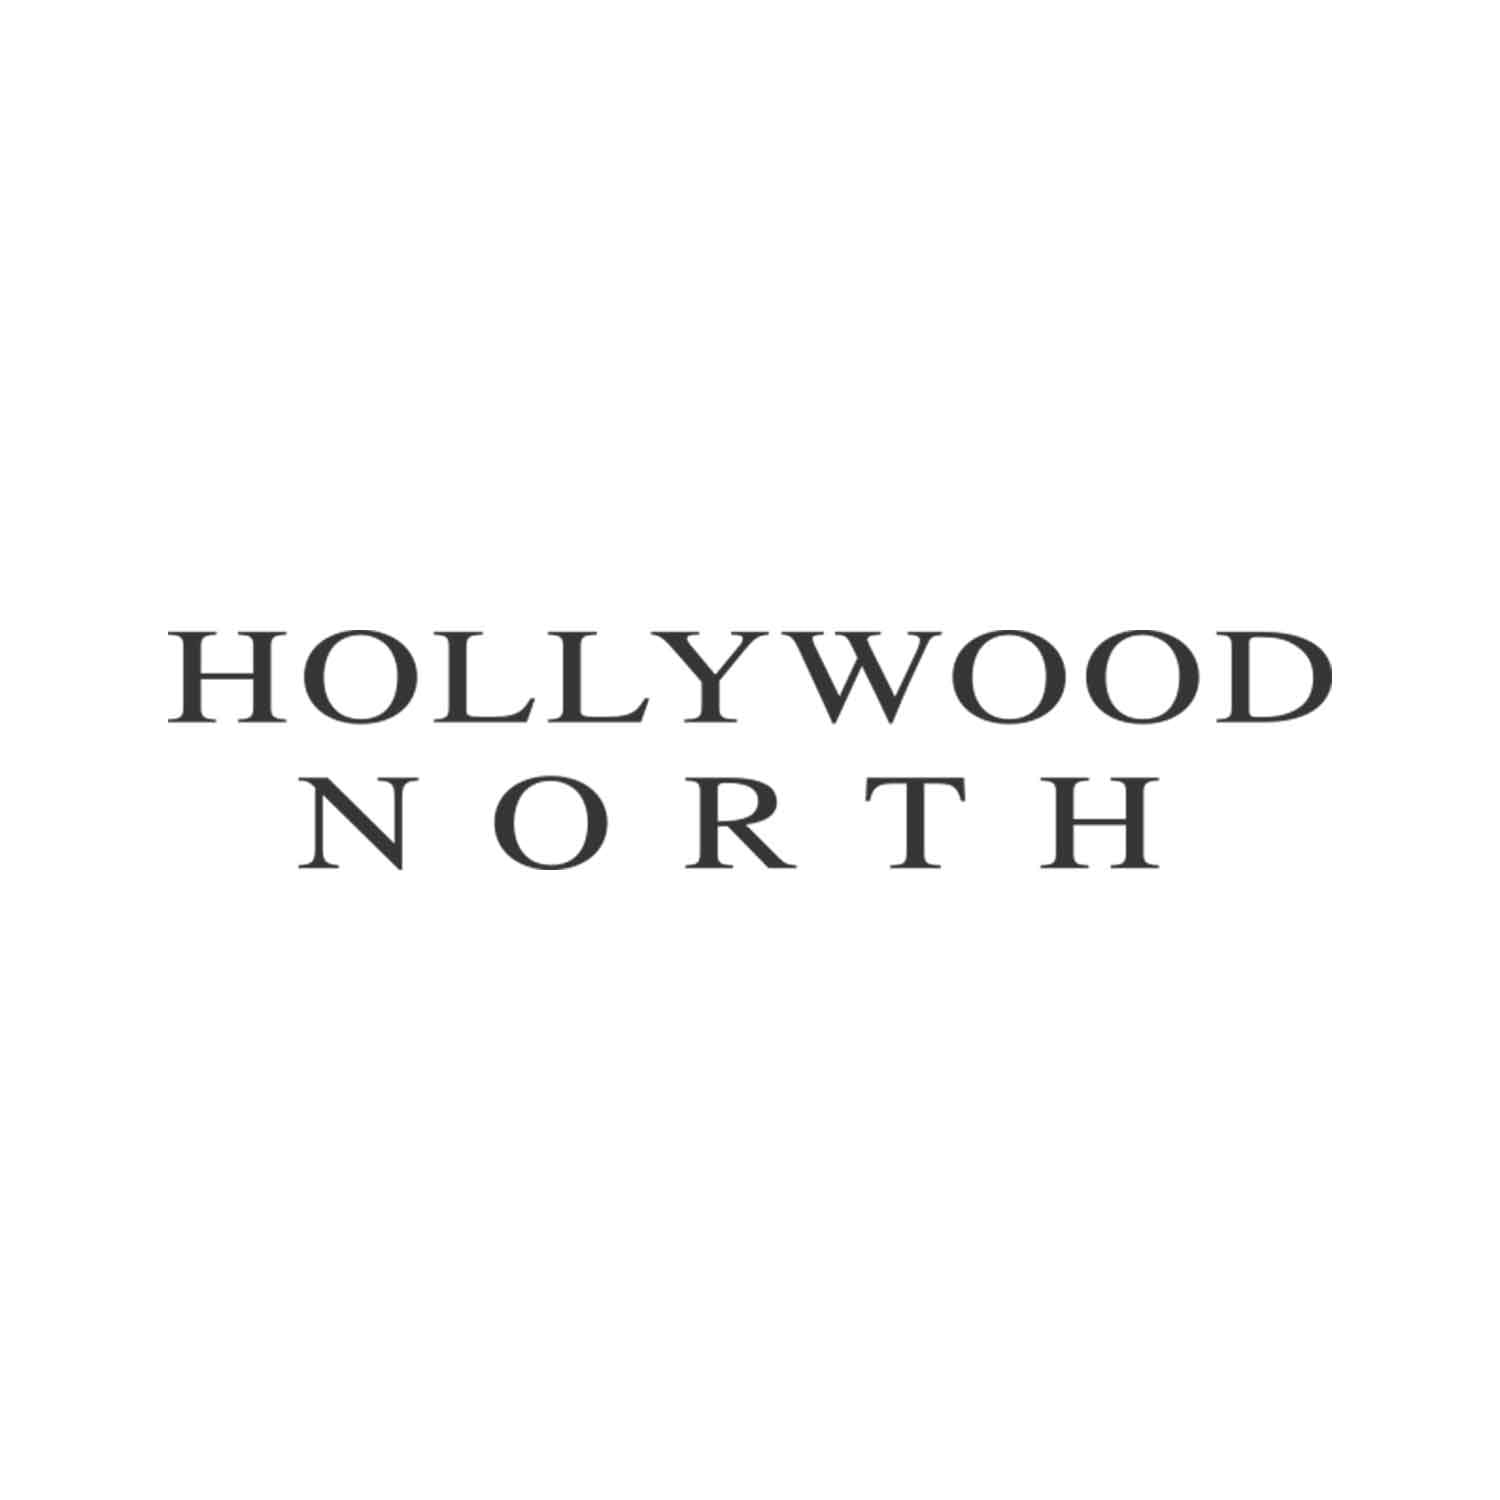 Hollywood Nort